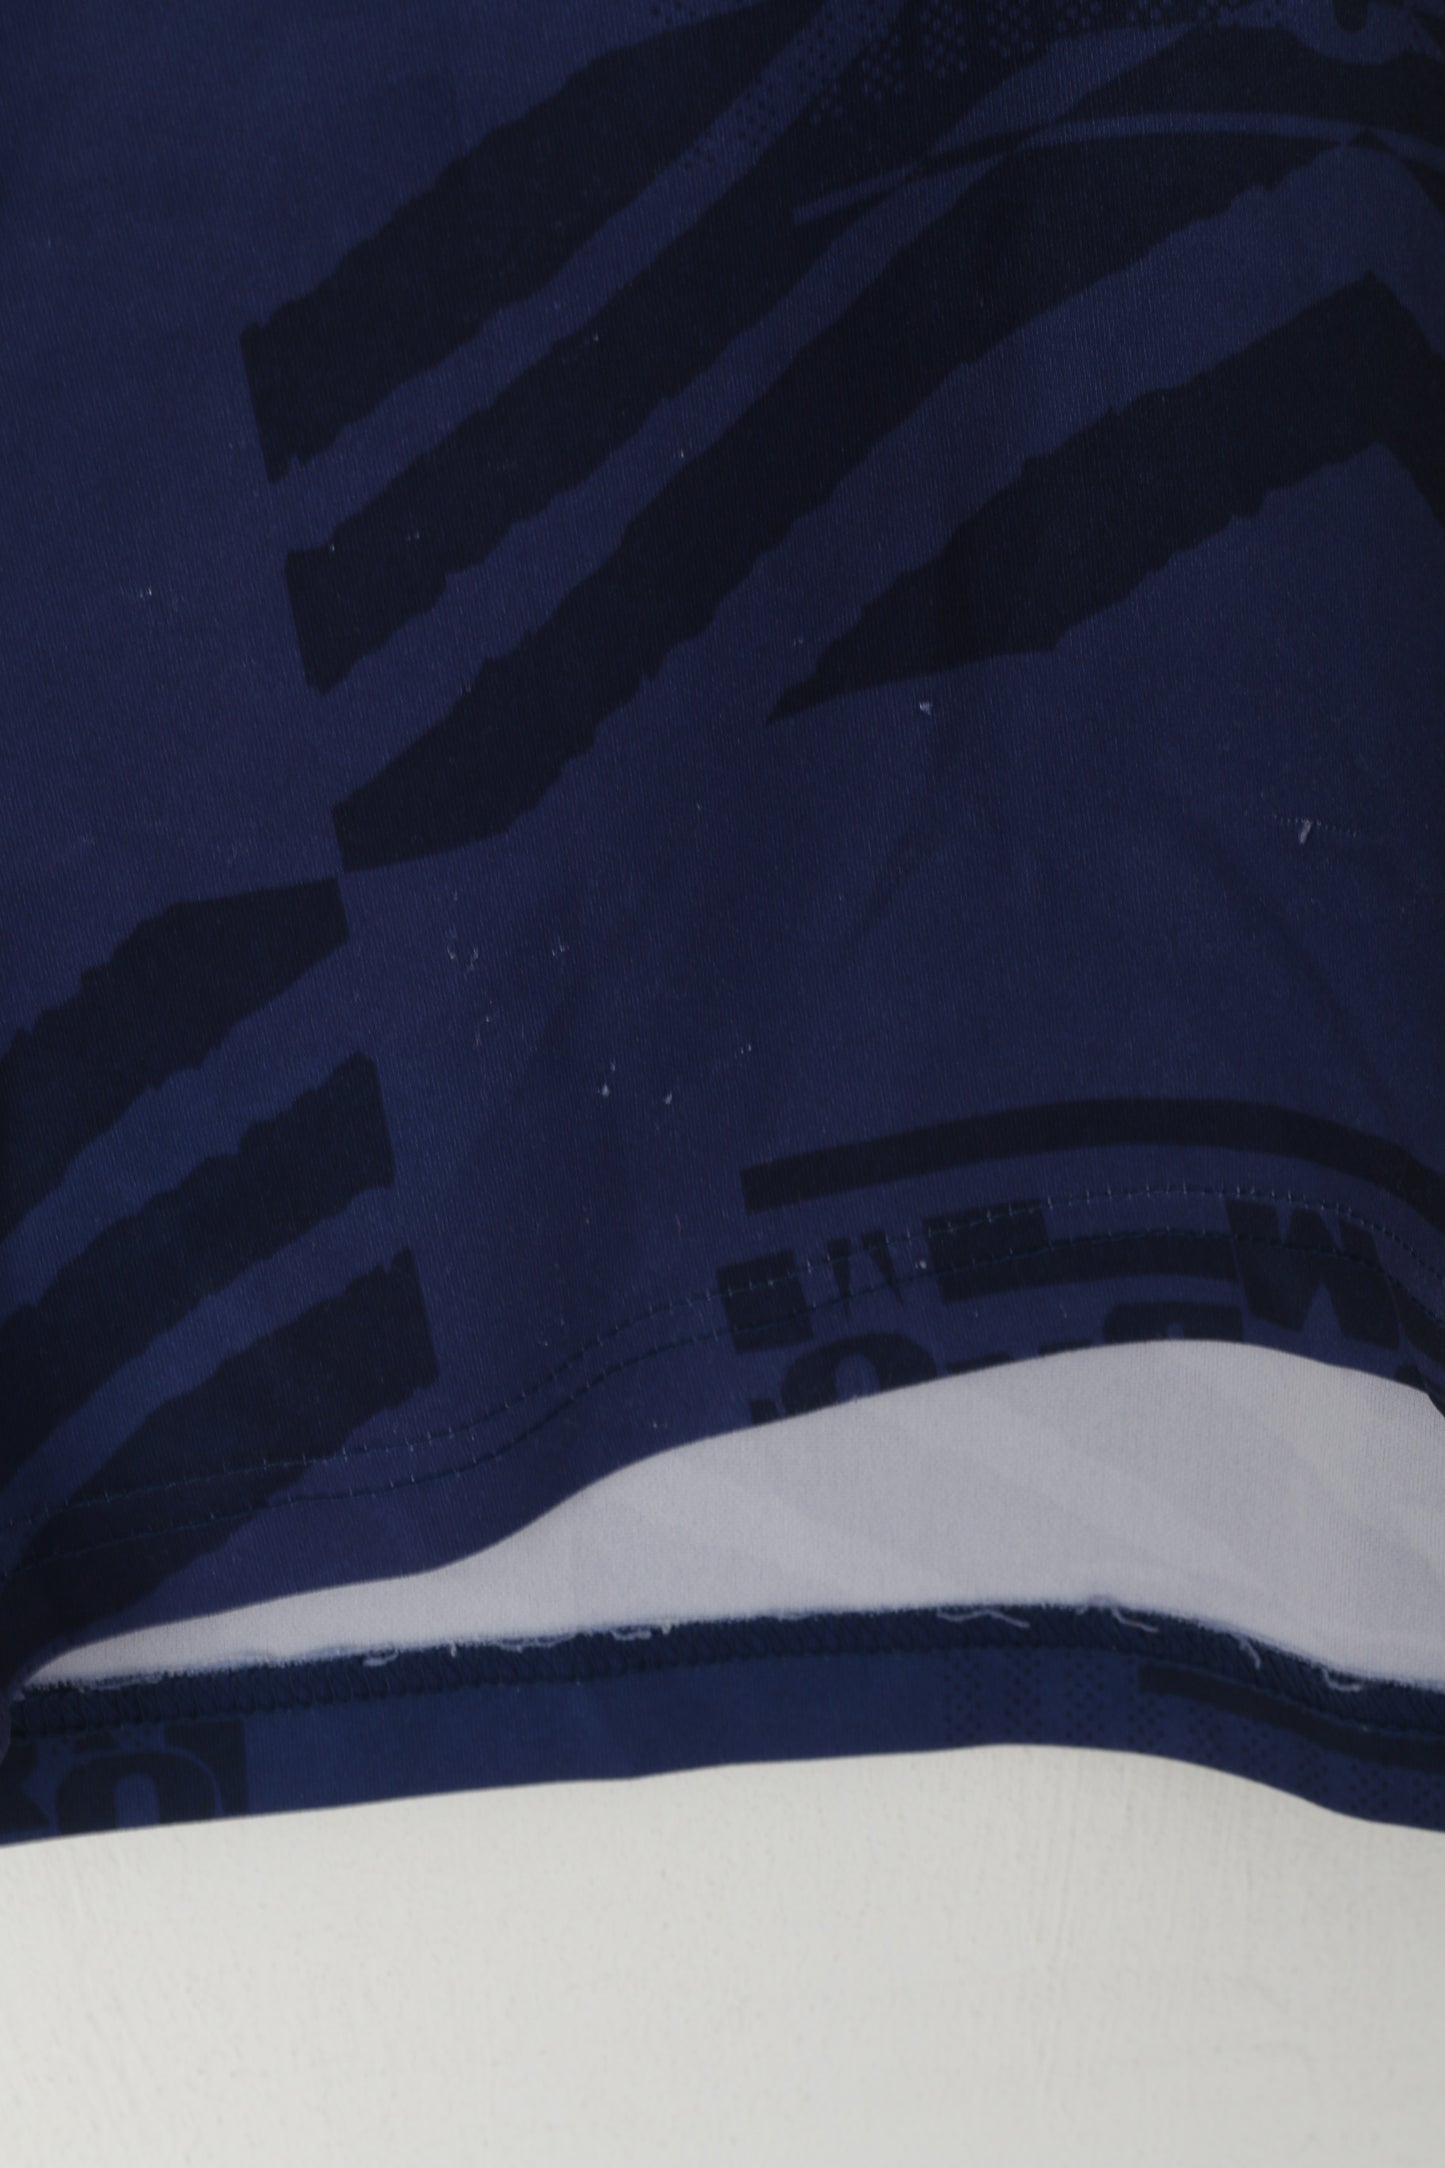 Umbro Men XL Long Sleeved Shirt Navy Vintage Football Jersey Printed Top